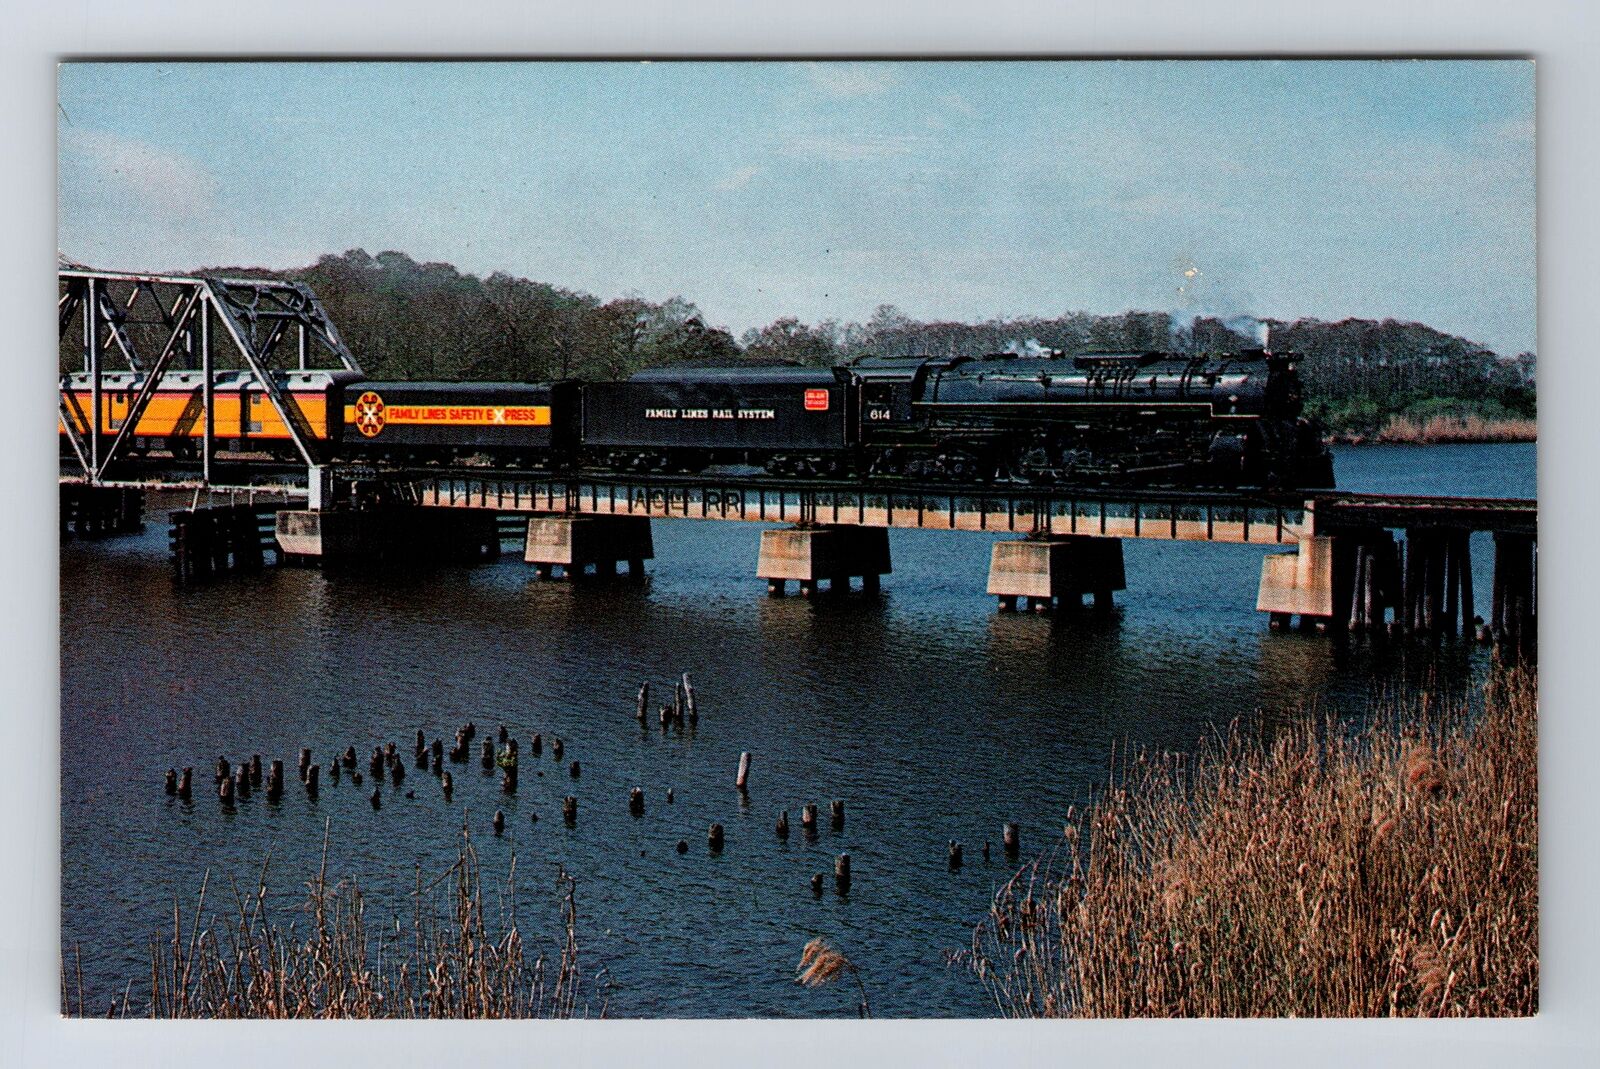 Sanford FL-Florida, Family Lines Seaboard Coast Line 614, Vintage Postcard